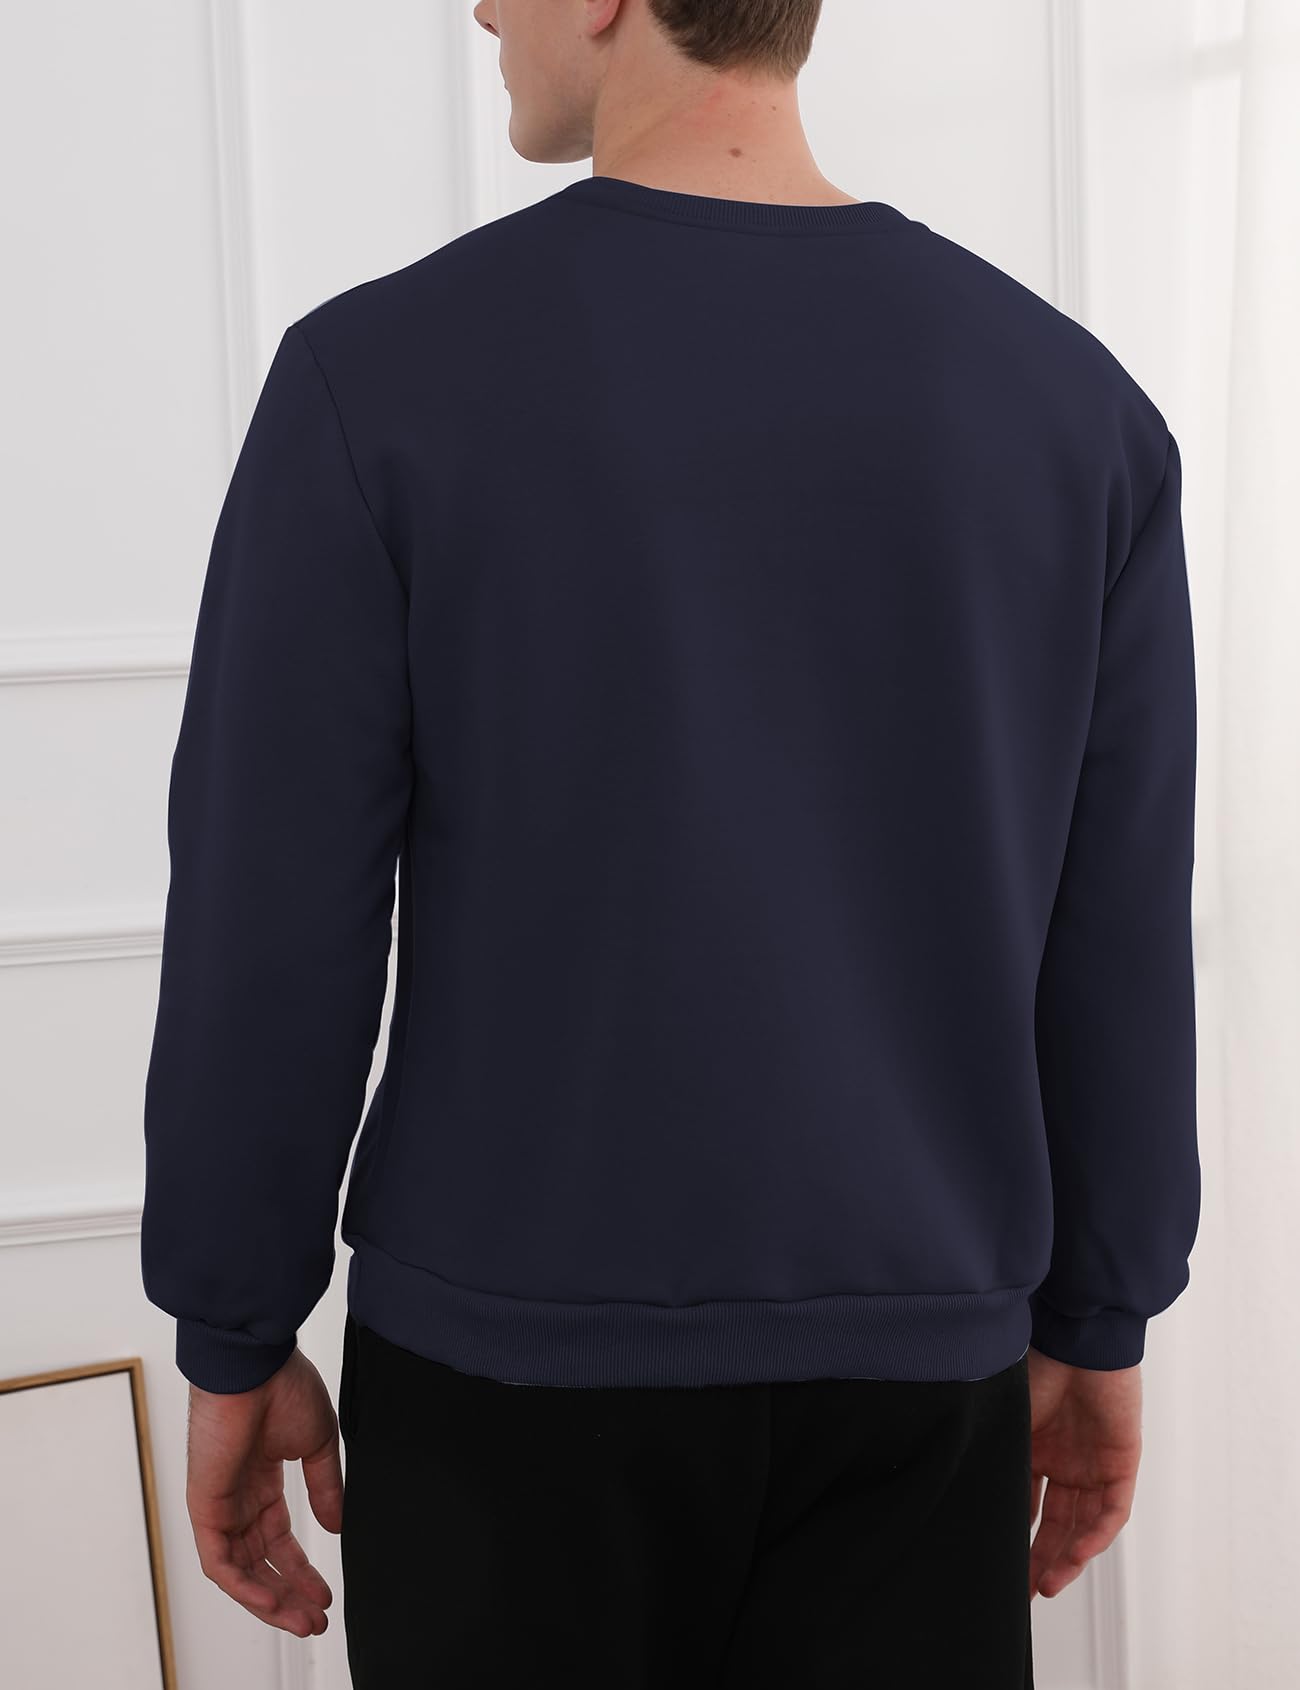 Gihuo Men's Warm Crewneck Sweatshirt Winter Sherpa Lined Fleece Sweatshirt Athletic Pullover Tops Loungewear (Navy, S)